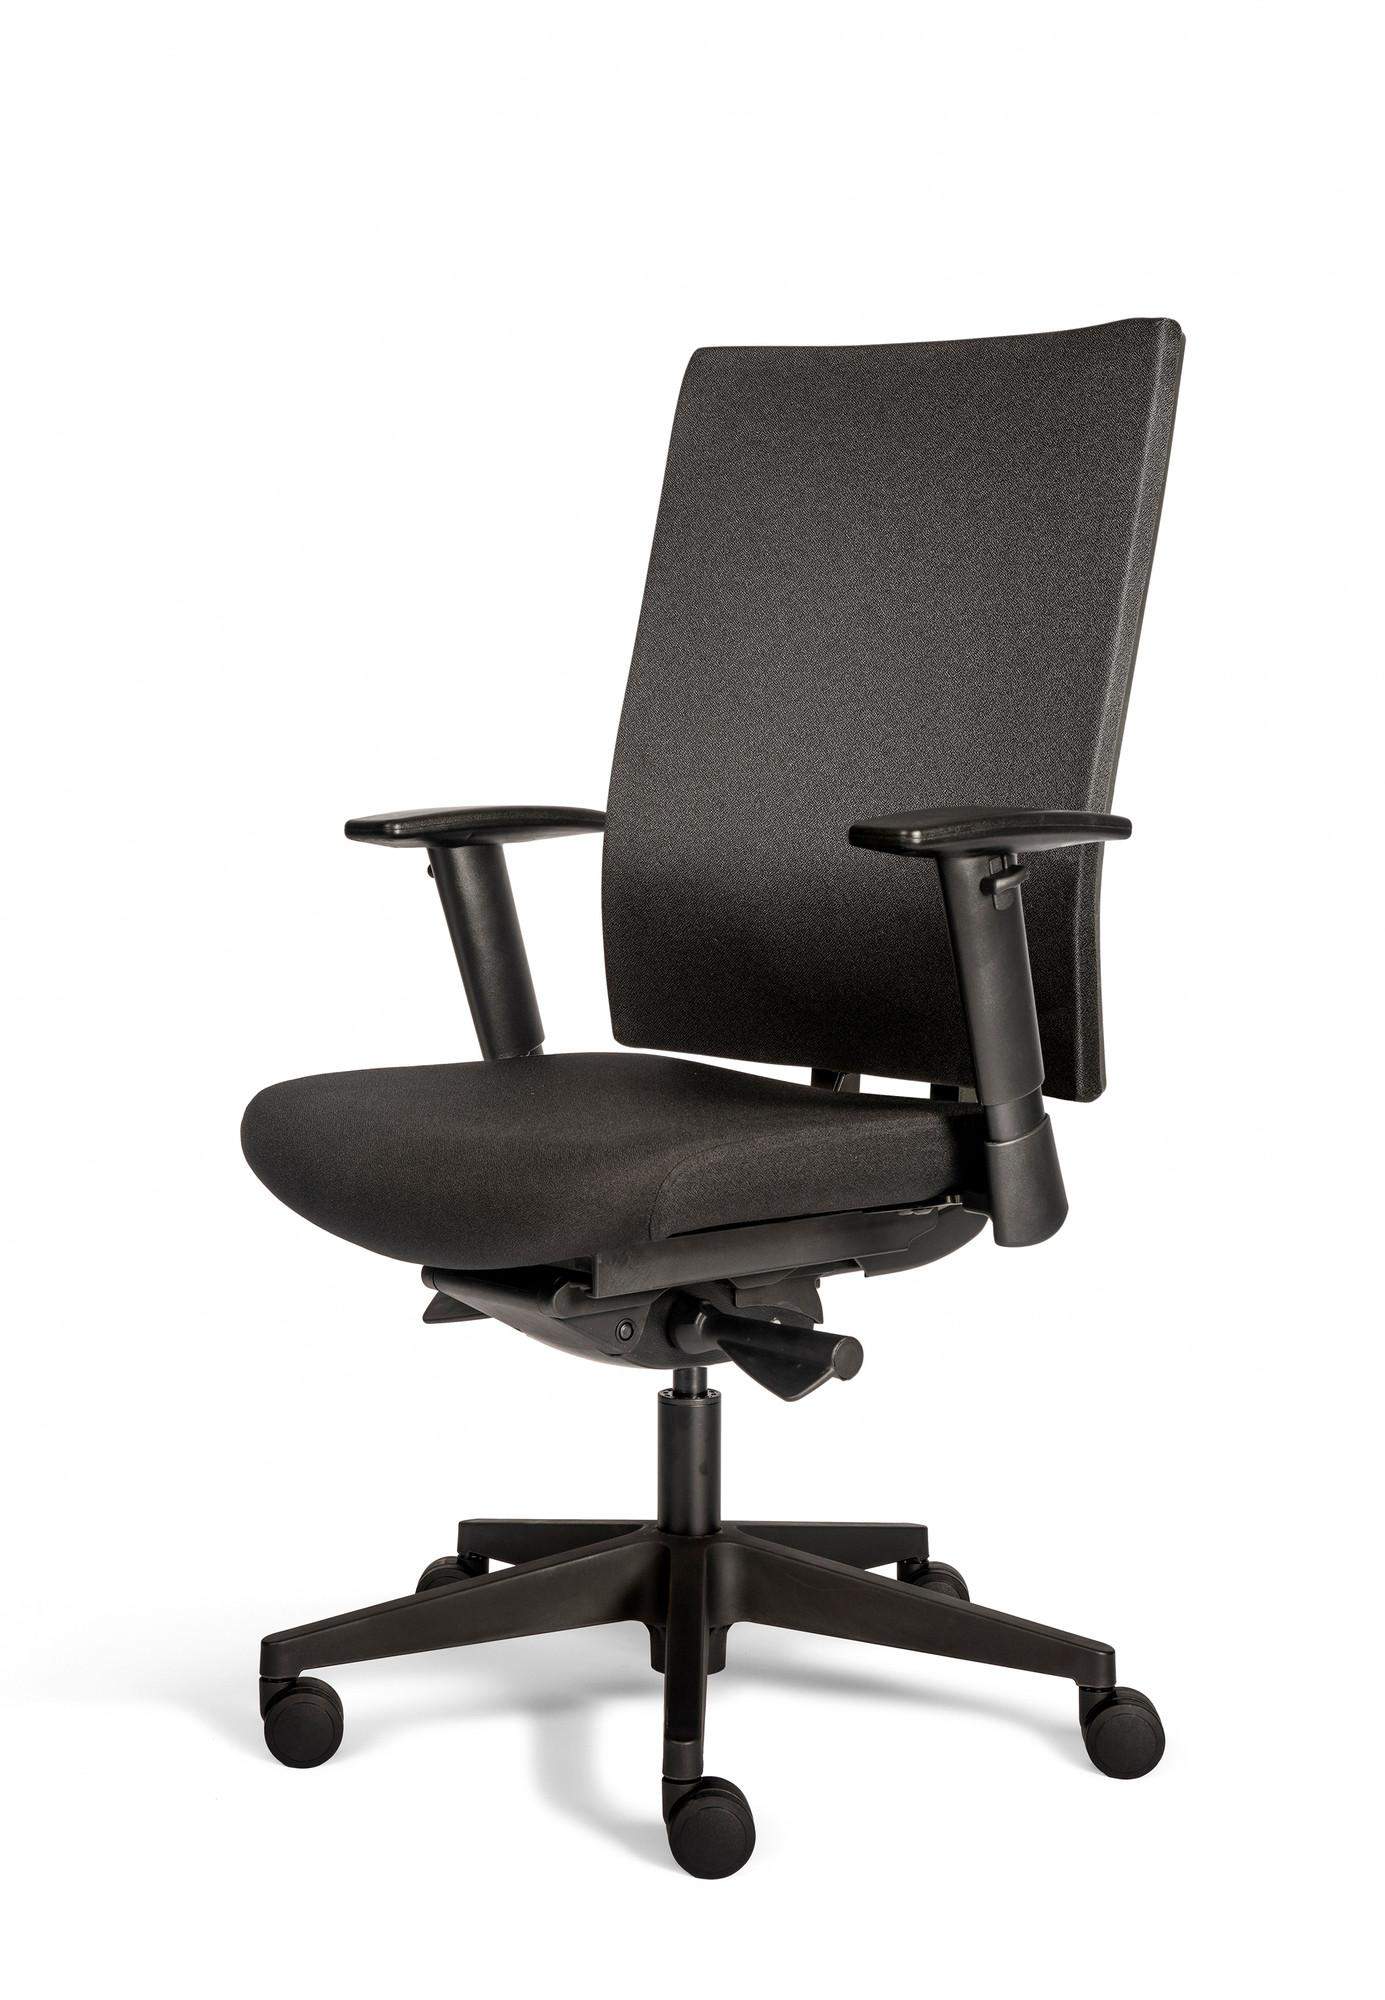 Chaise de bureau Ergo787 confort - 2